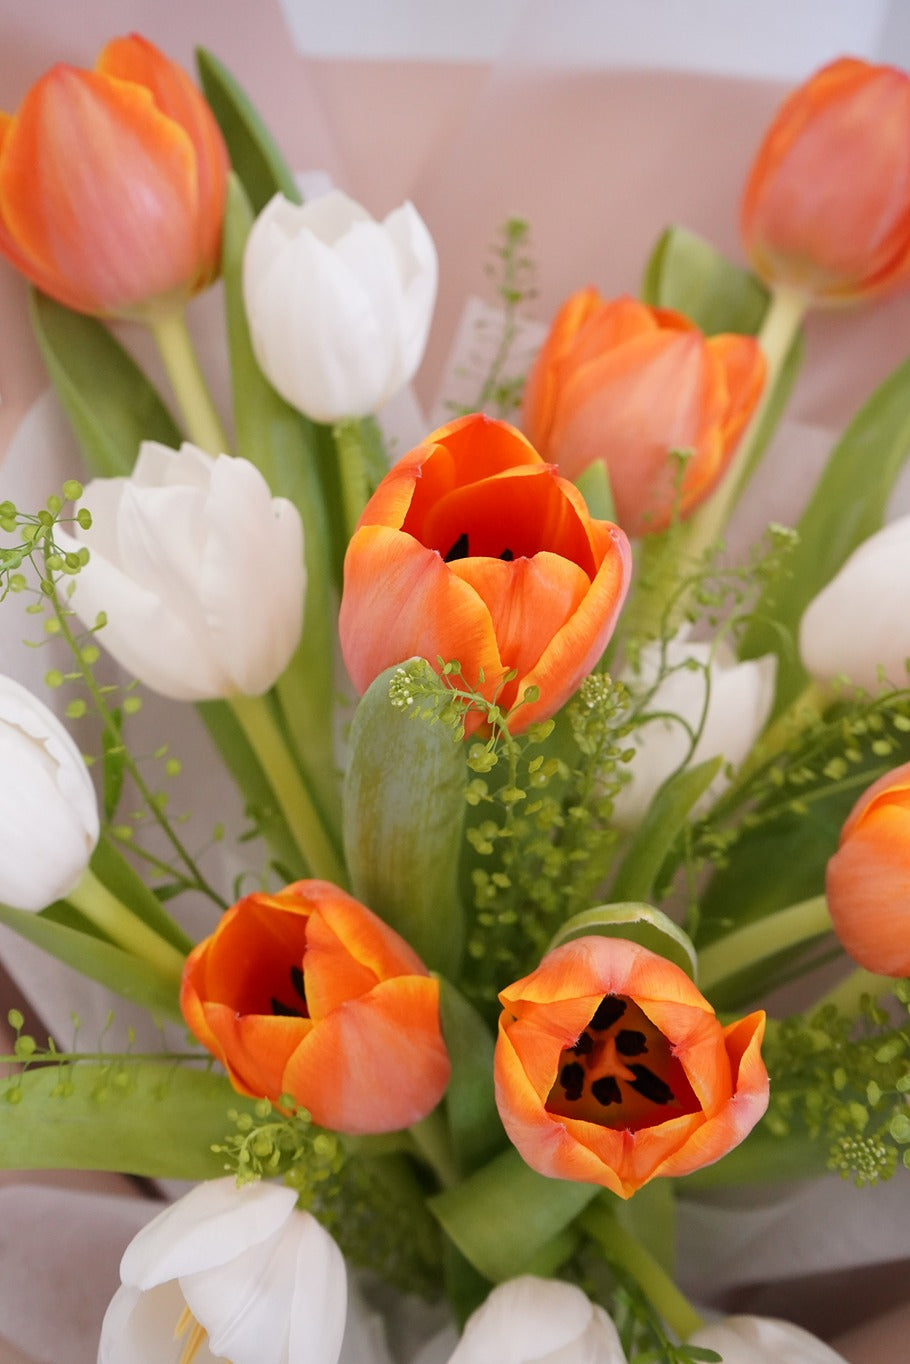 Tulip (2 Colors) - Fresh flowers, Tulips- 18 stems - Orange - Yellow - Anniversary - Birthday - Bouquet - 5